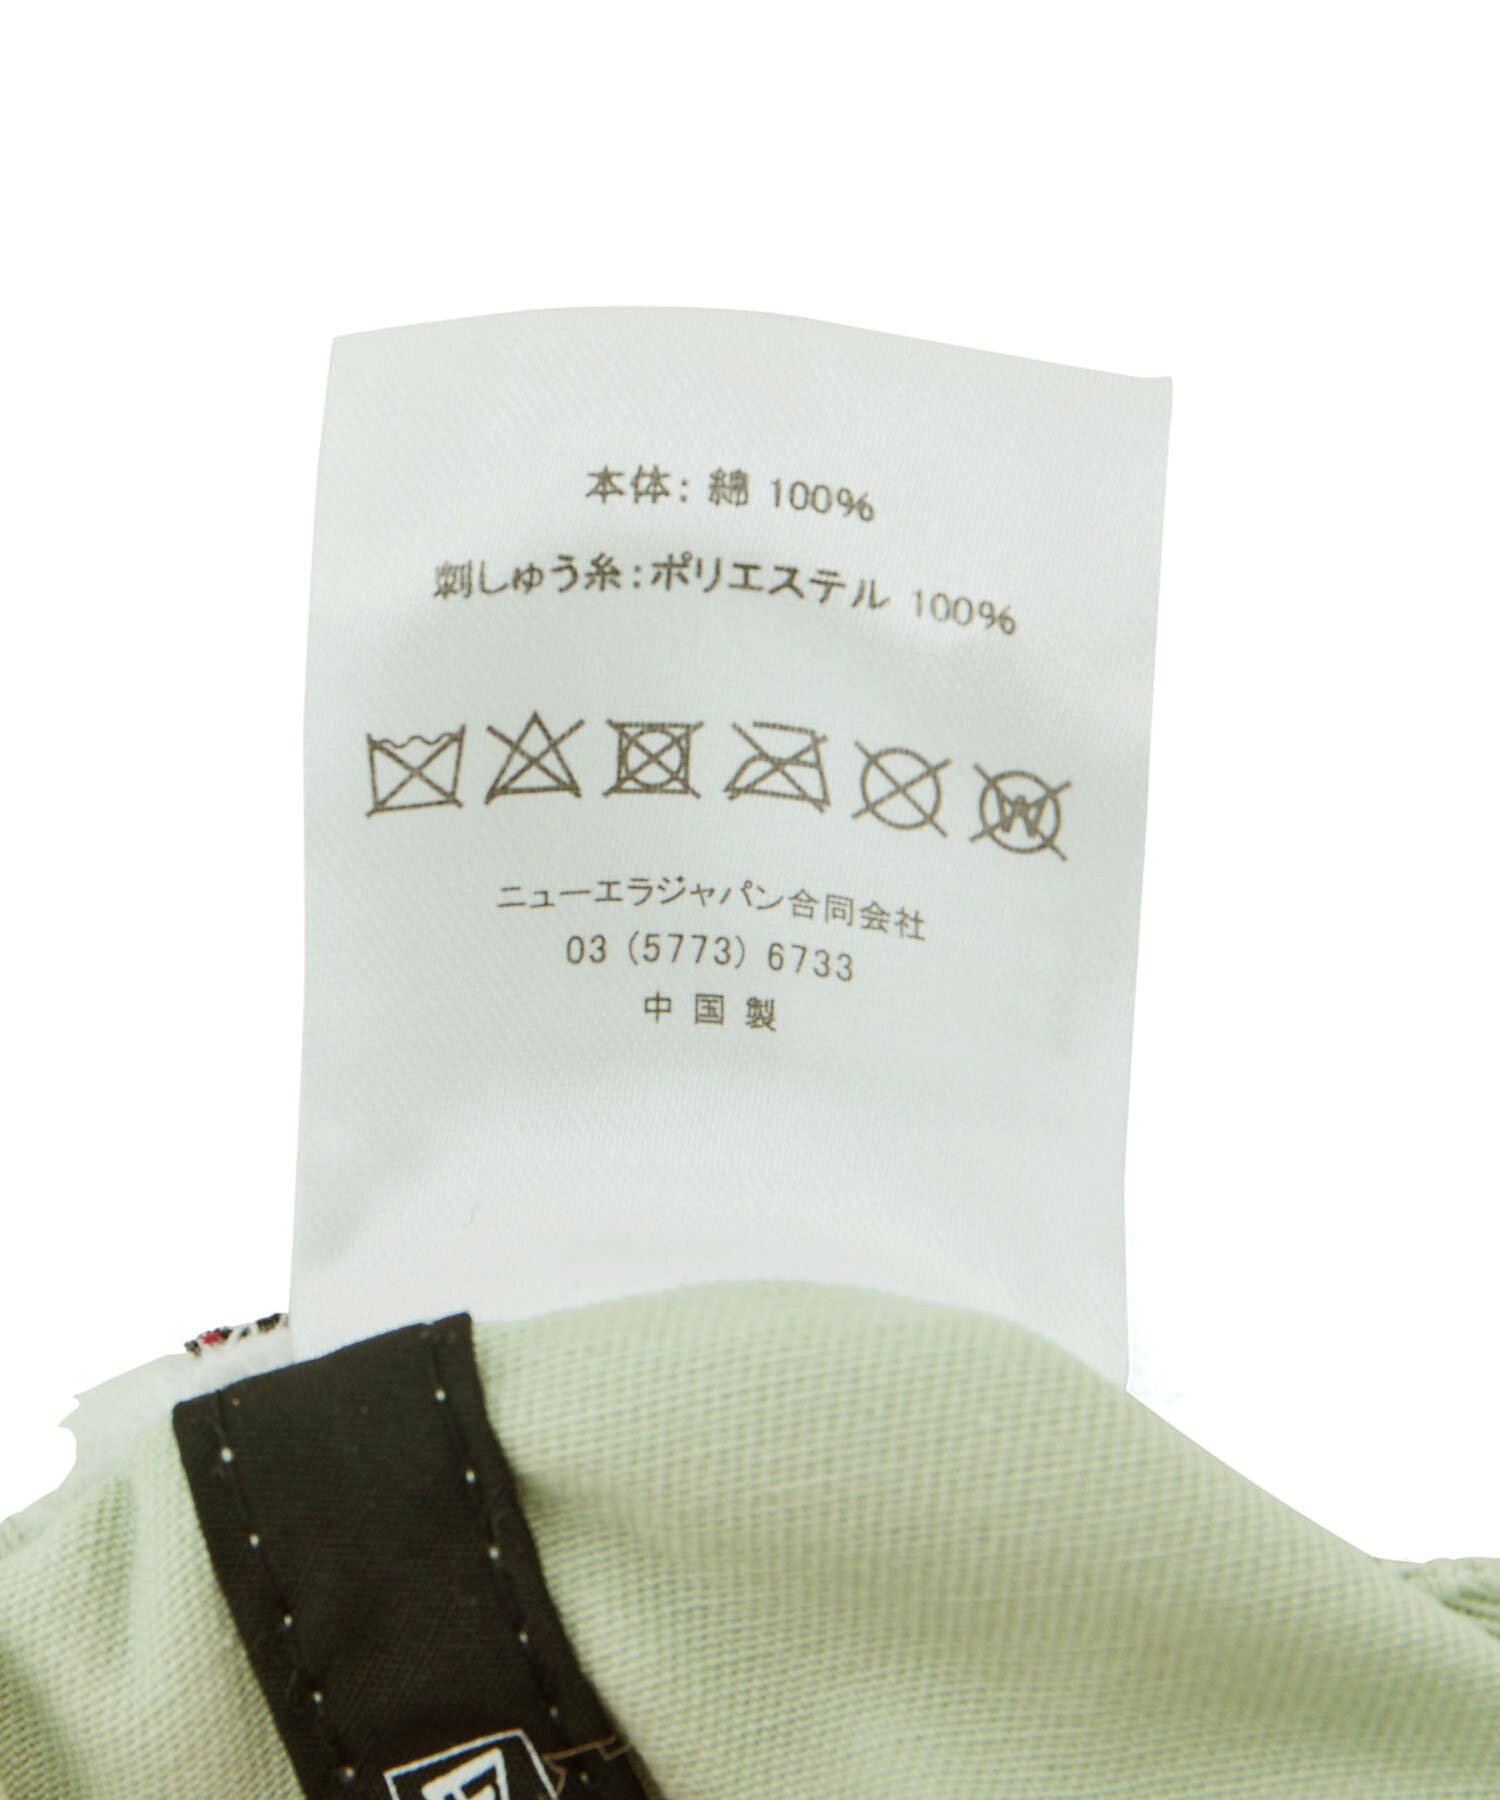 【NEWERA(R)/別注】 Casual Classic handwritten  logo cap